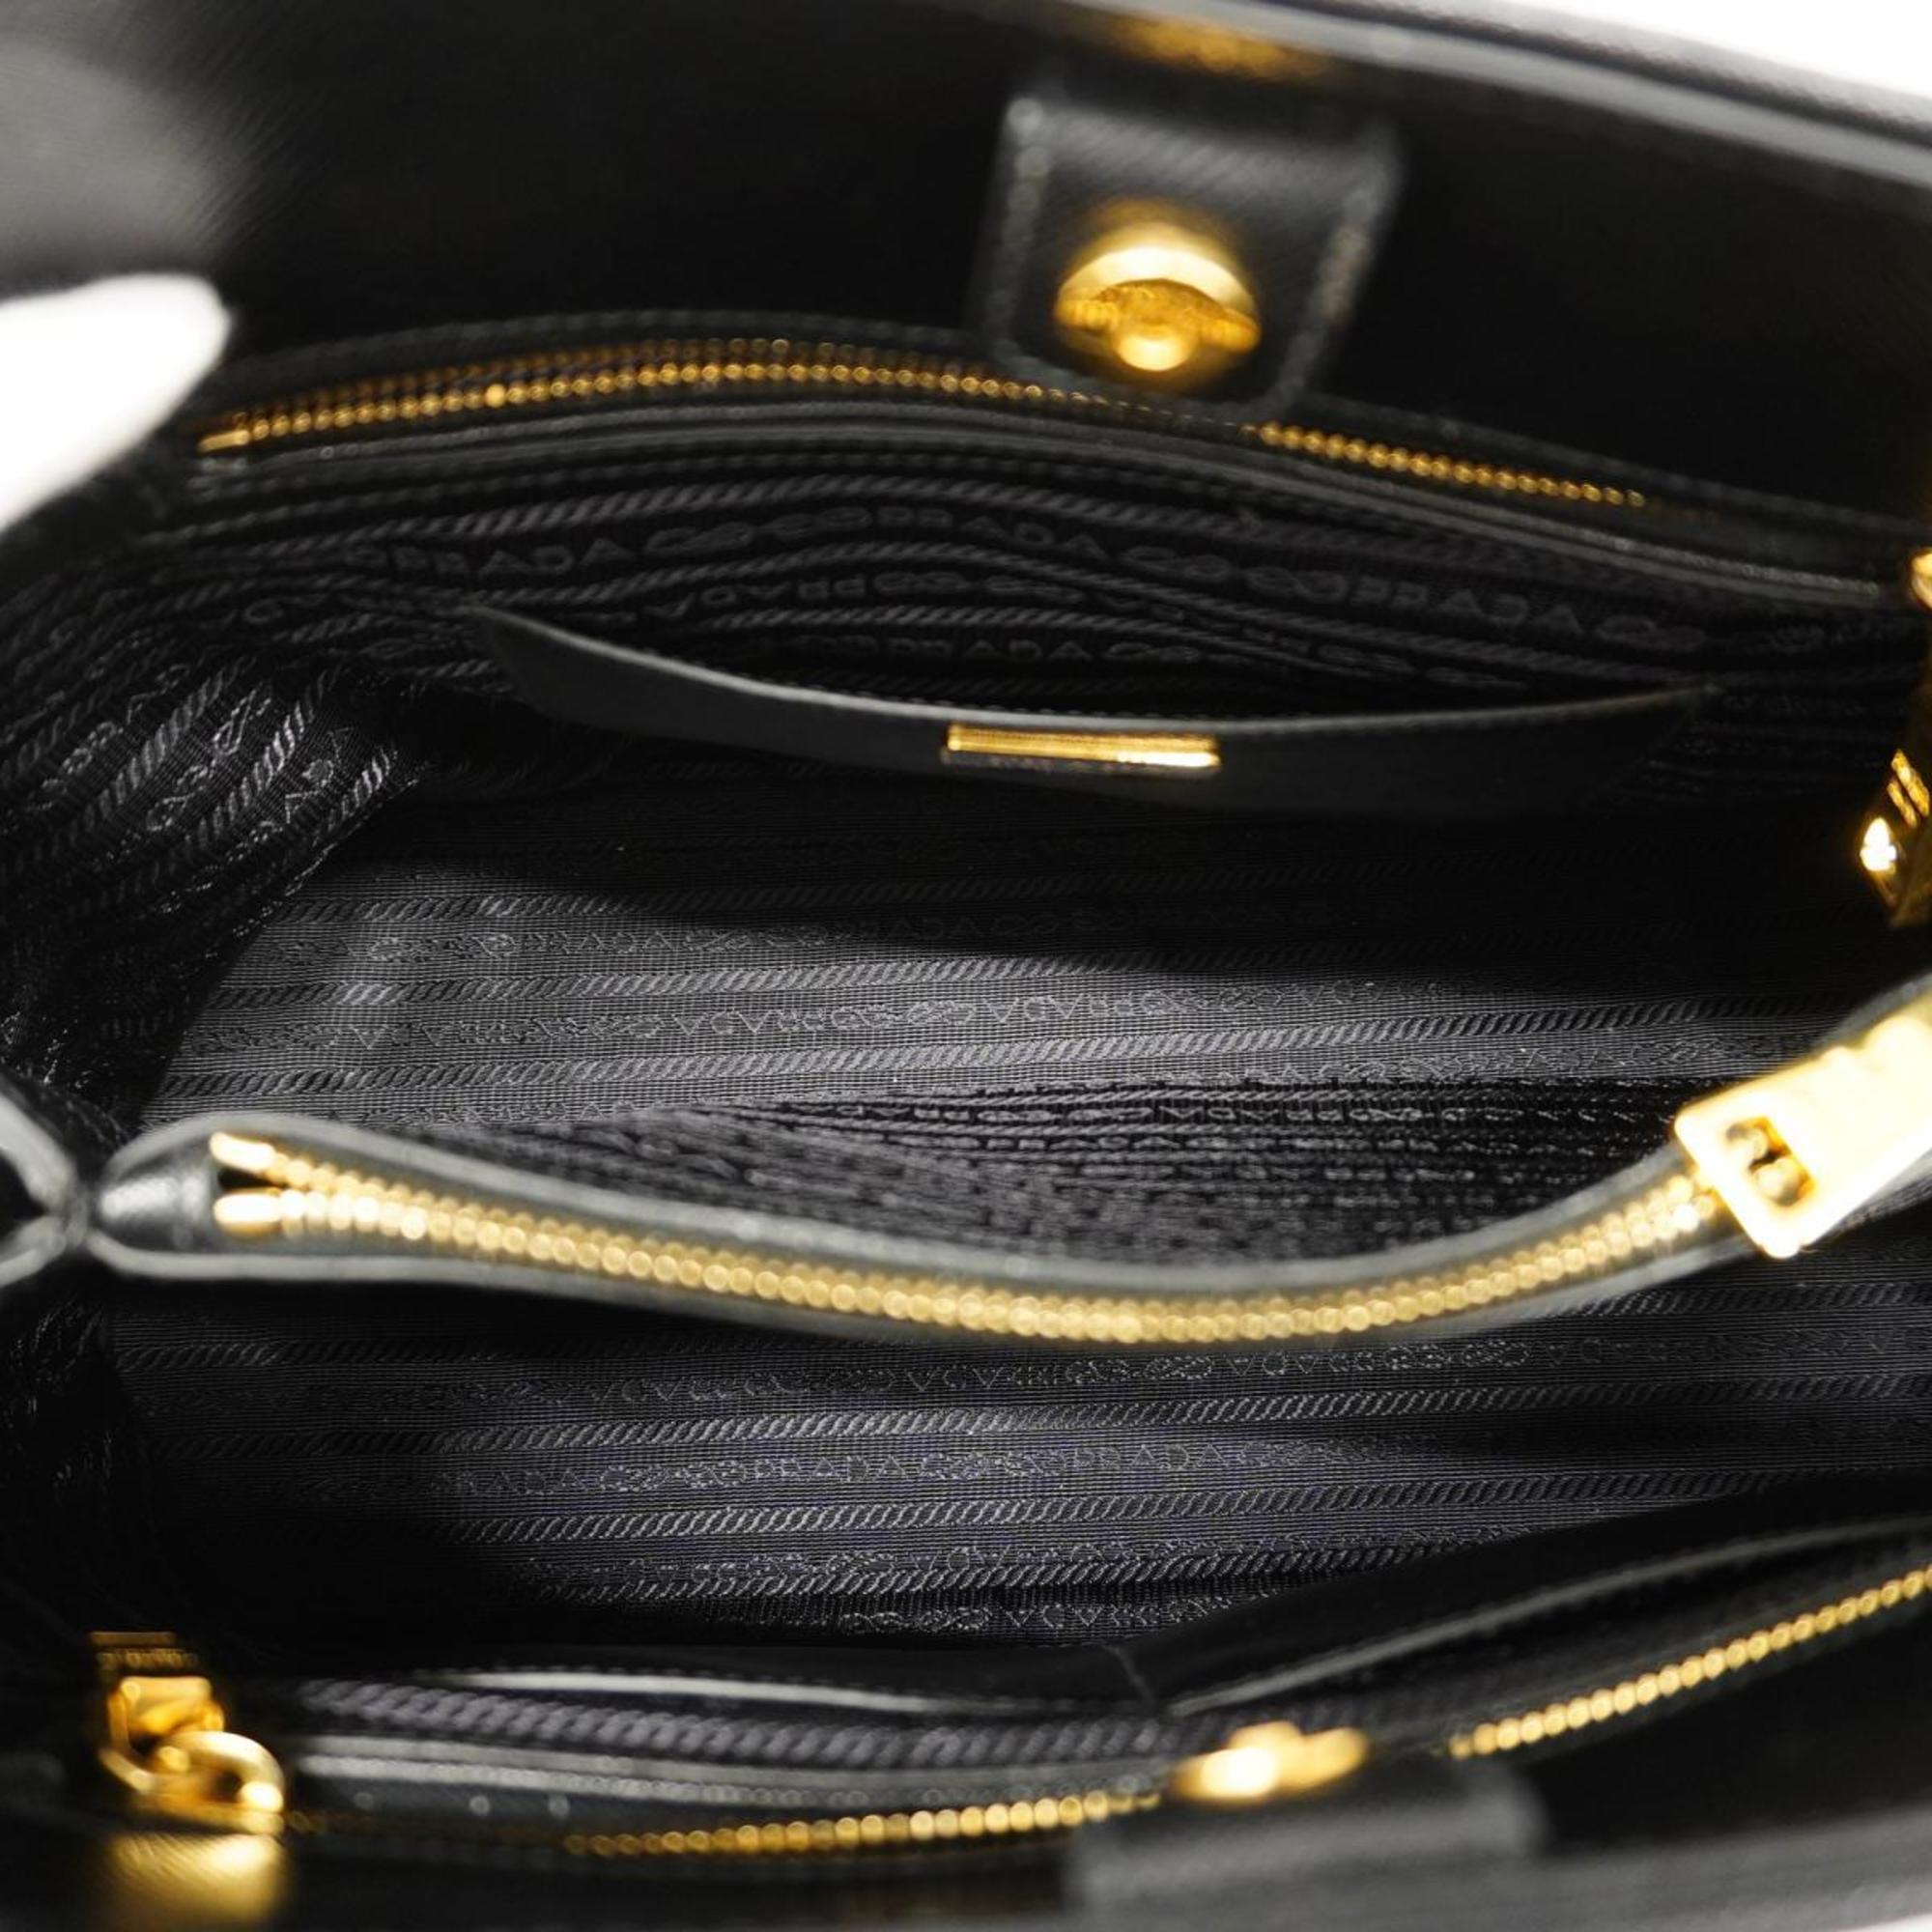 Prada handbag saffiano leather black ladies